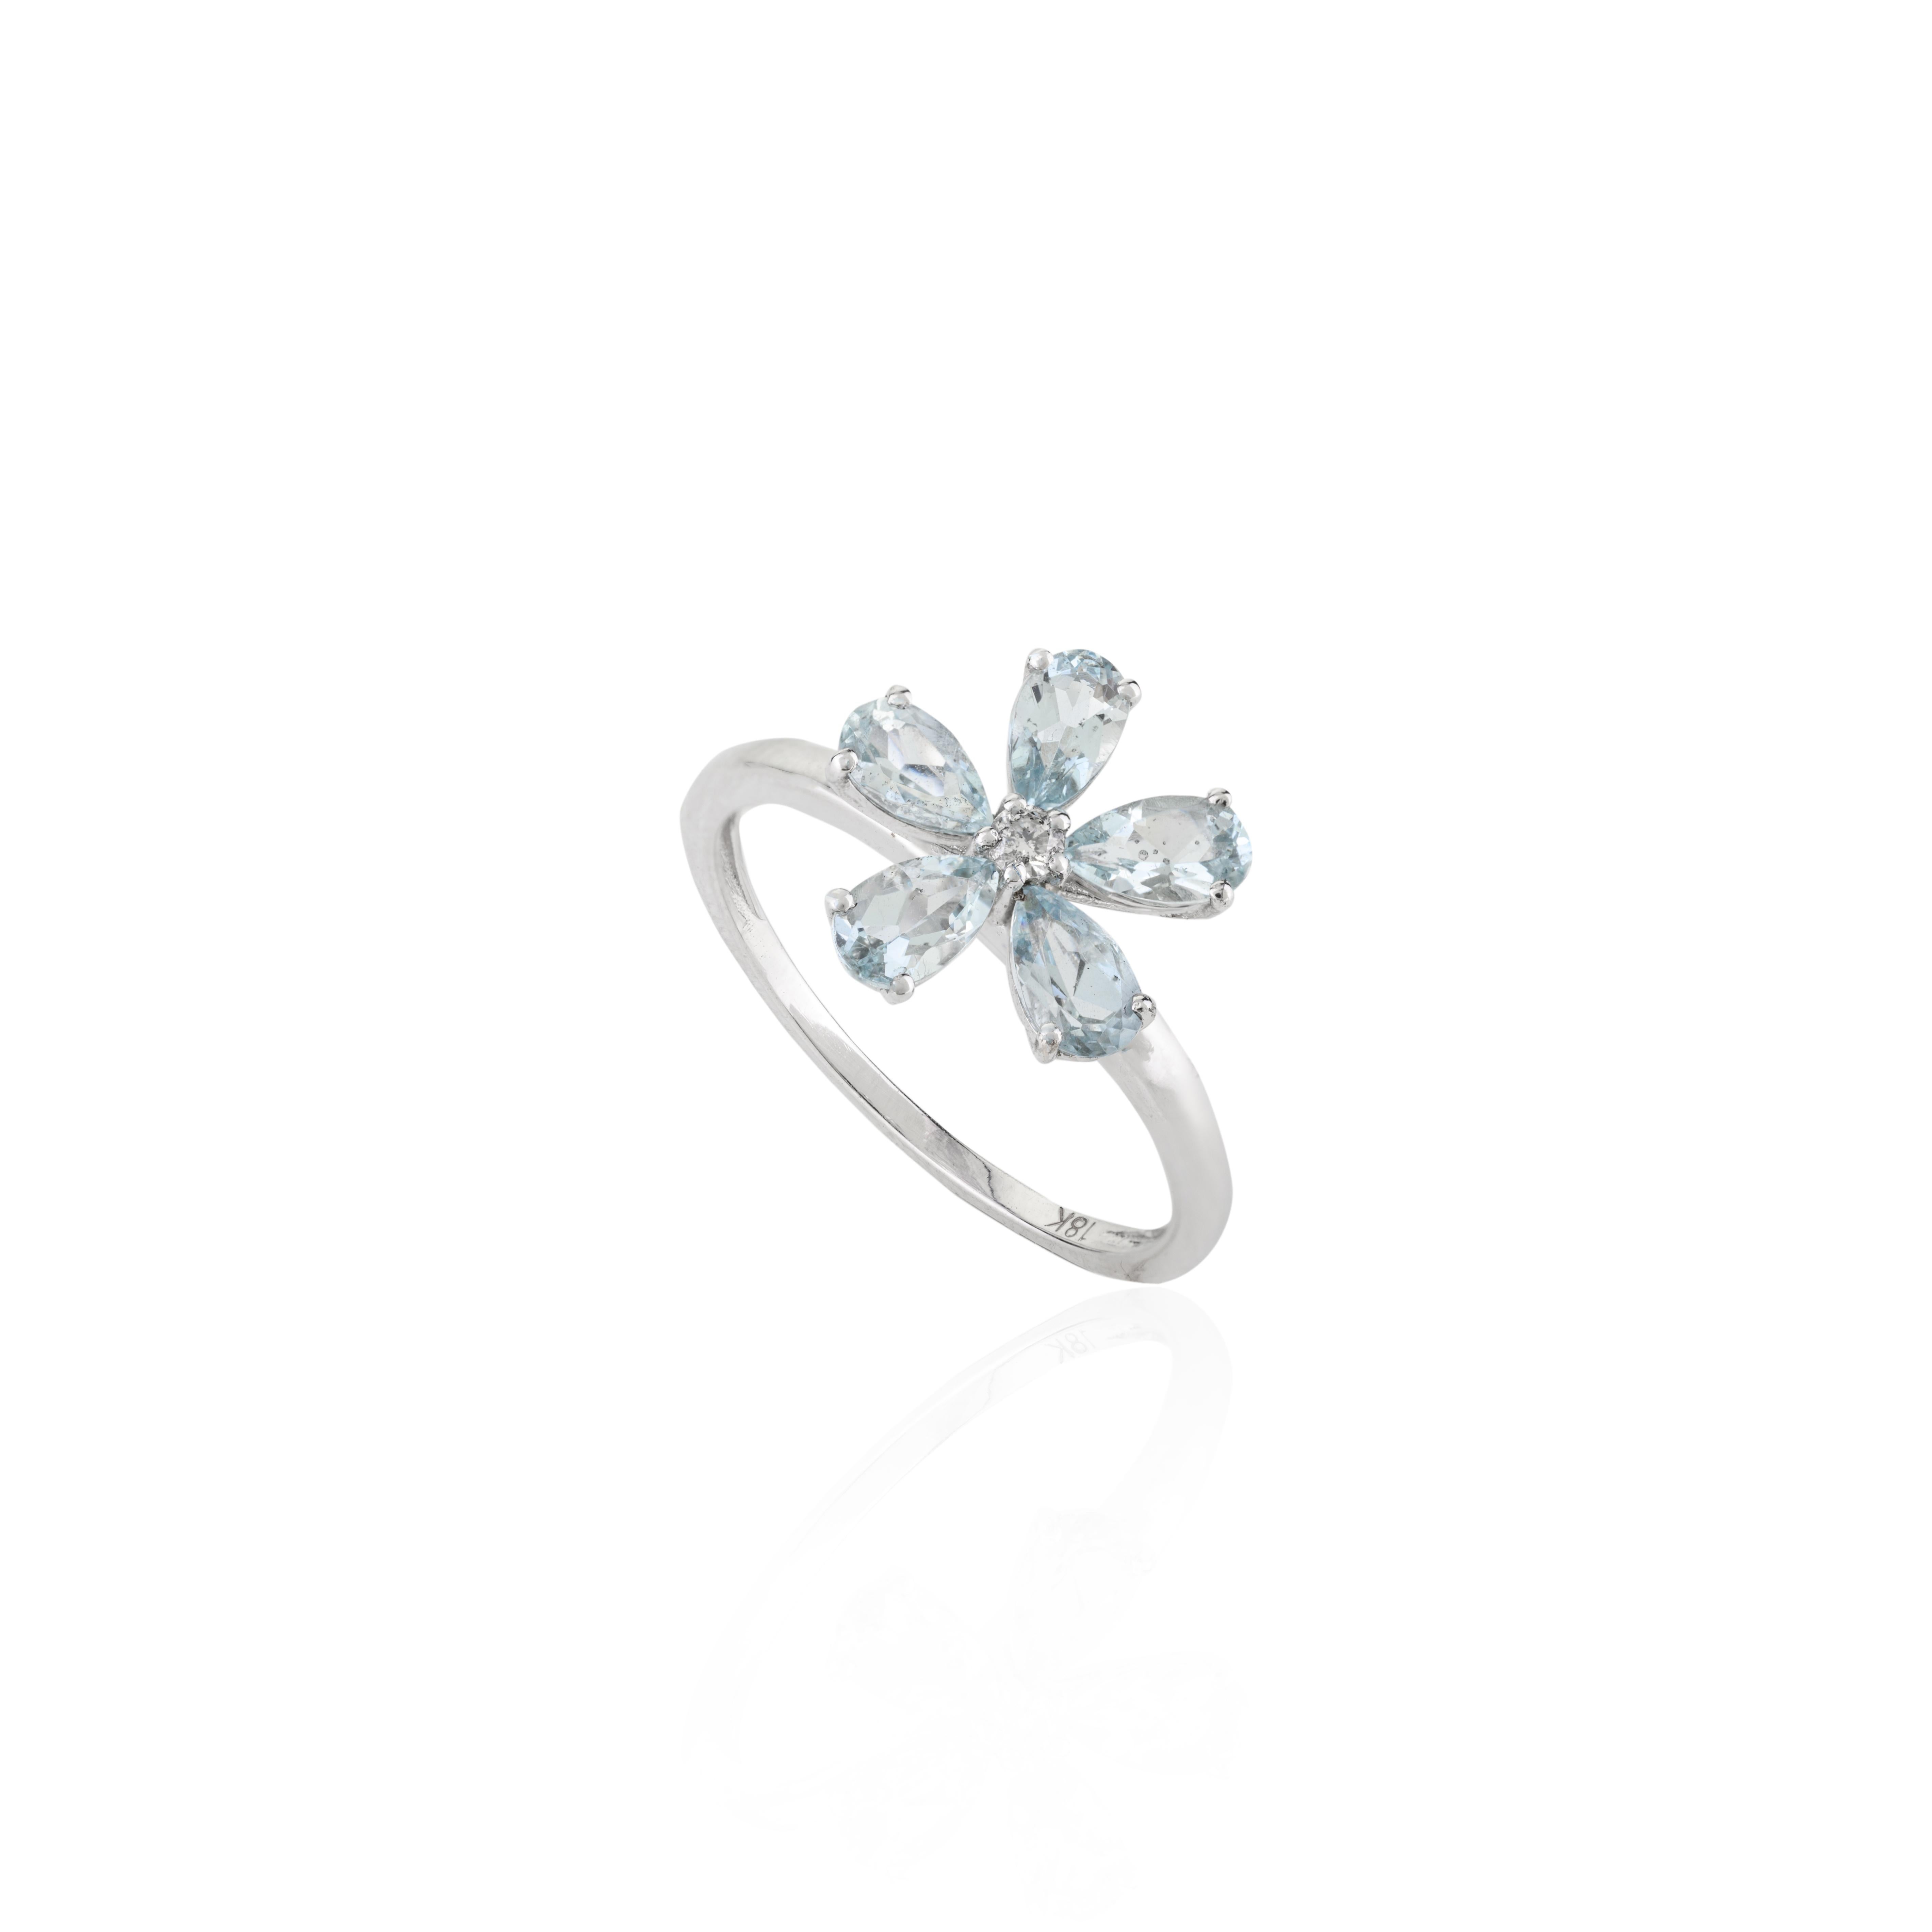 For Sale:  Natural Aquamarine Diamond Spring Flower Ring in 18k White Gold for Her 8